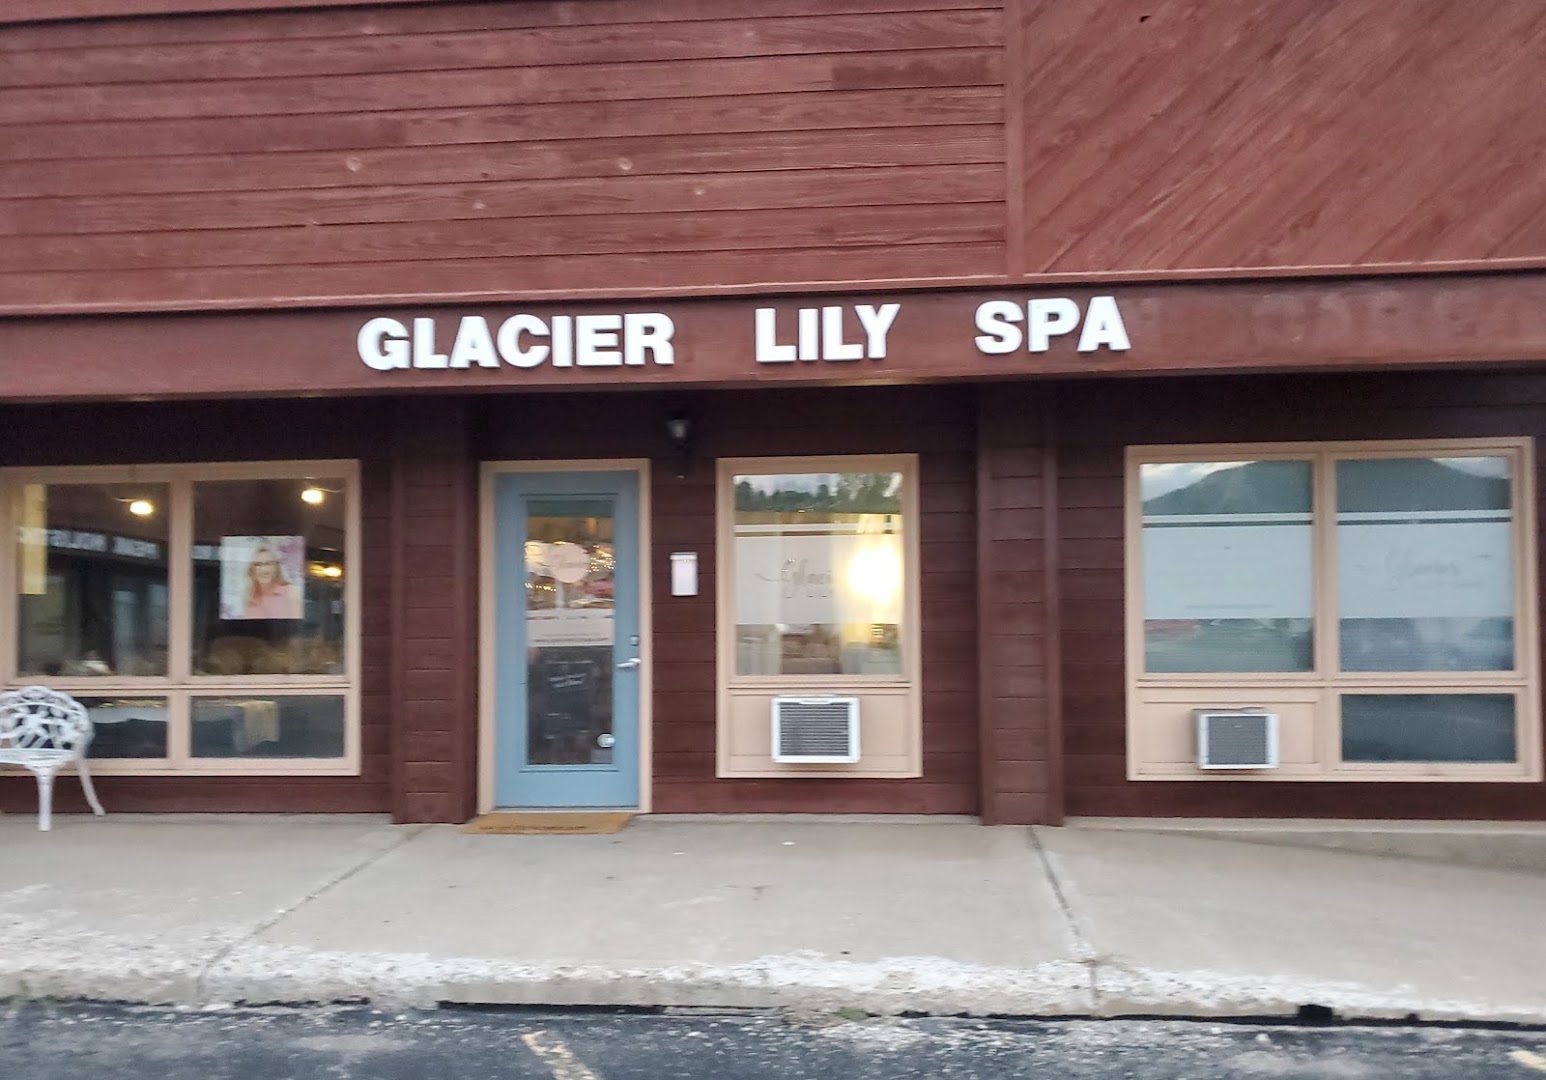 Glacier Lily Spa